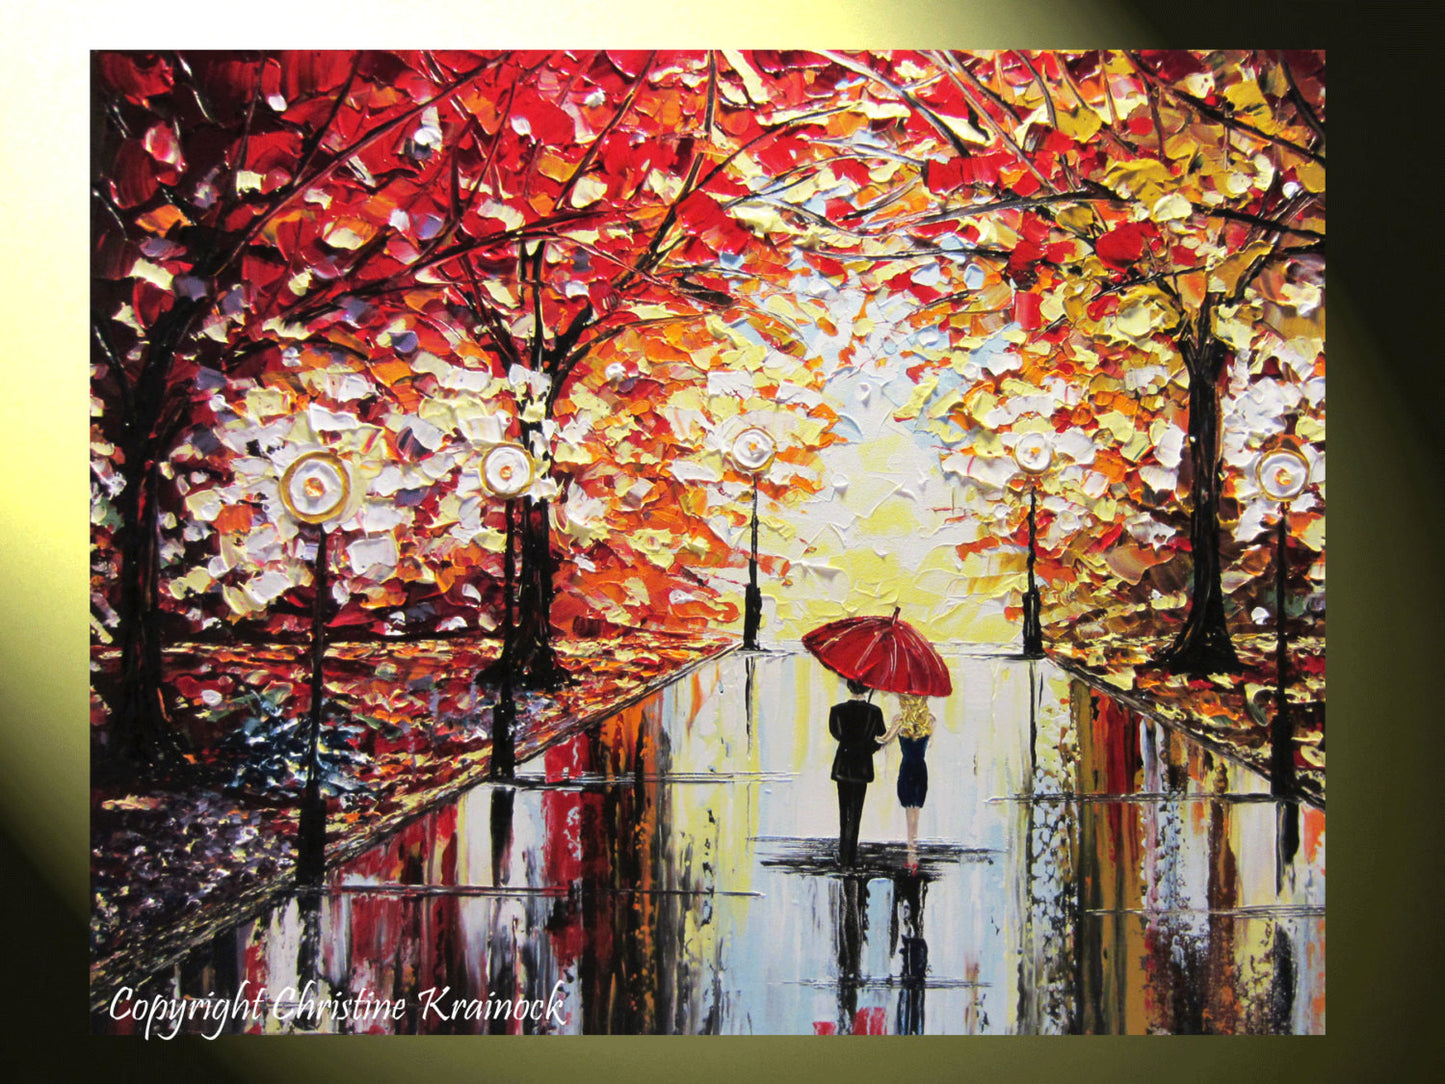 Load image into Gallery viewer, SOLD Original Art Abstract Painting Couple Red Umbrella Trees Rain Modern Landscape Textured Palette Knife Large Summer  -Christine Krainock - Christine Krainock Art - Contemporary Art by Christine - 1
